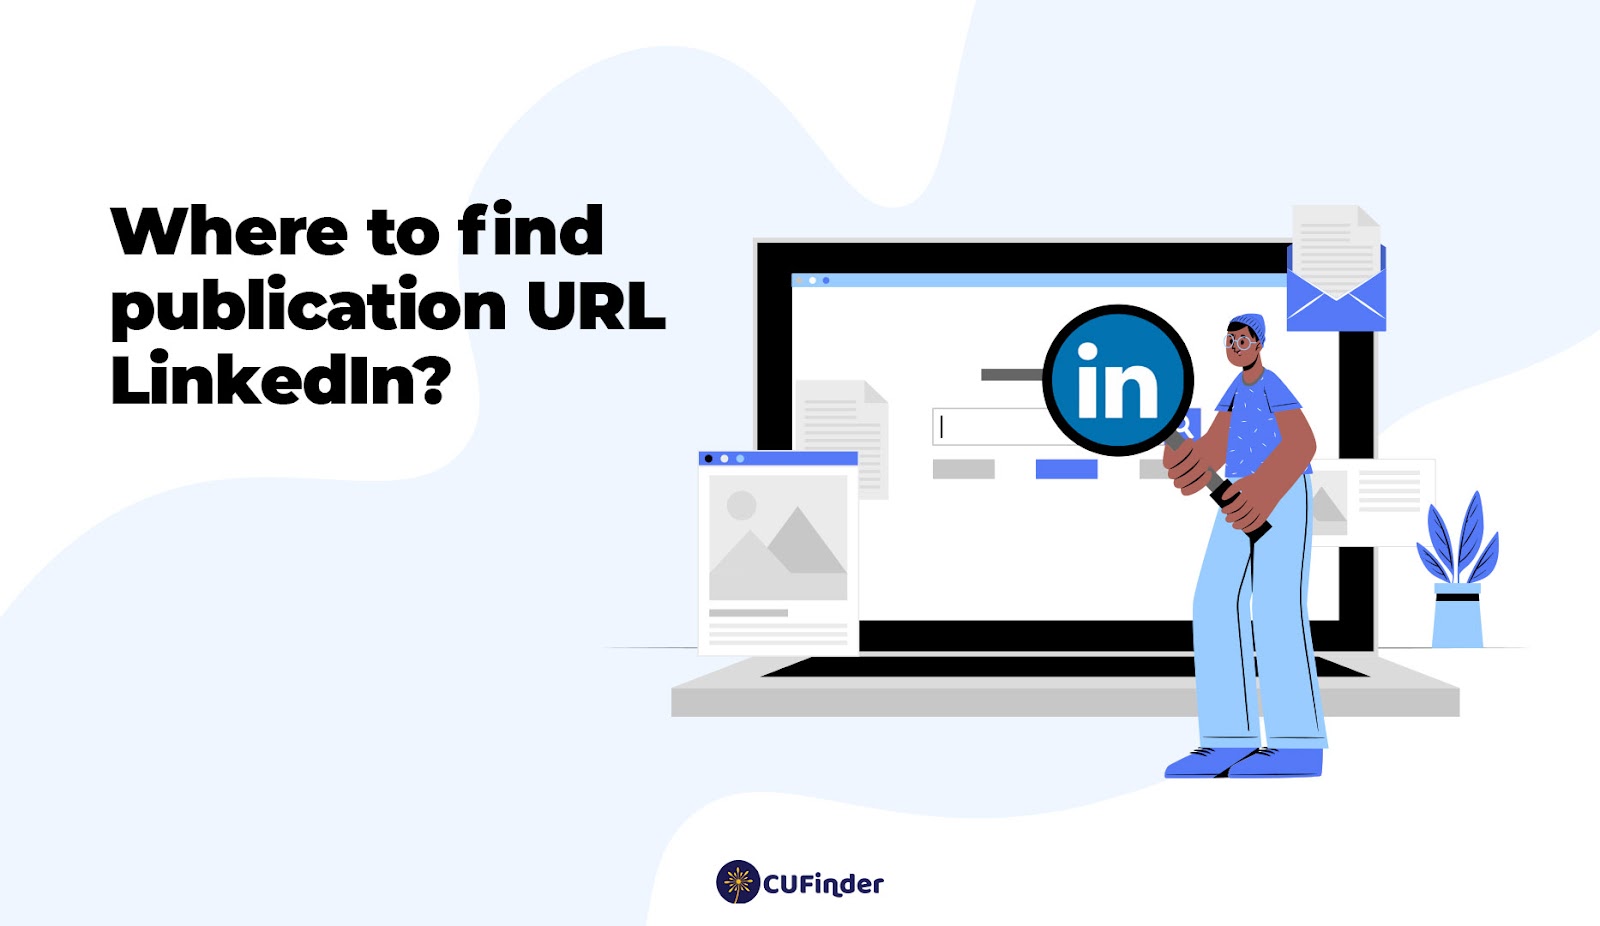 Where to find publication URL LinkedIn?